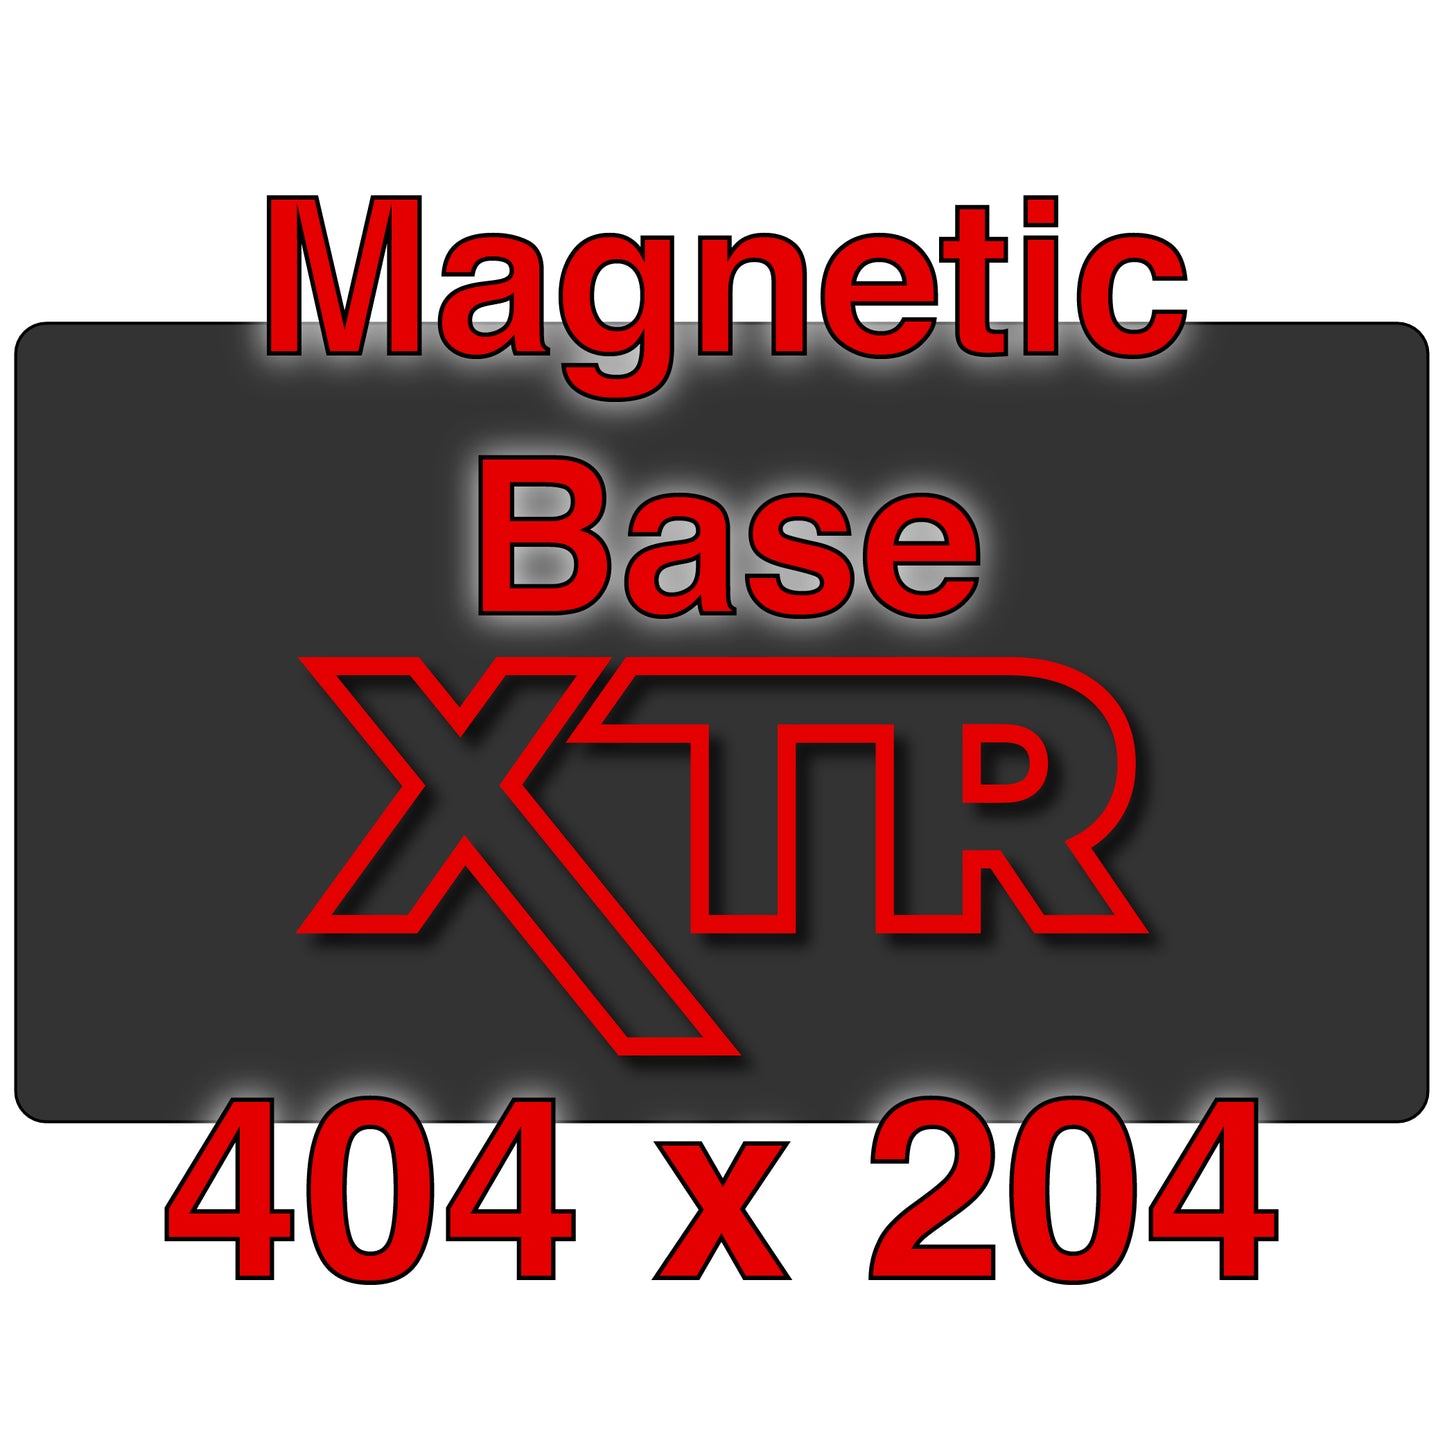 XTR Magnetic Base - 404 x 204